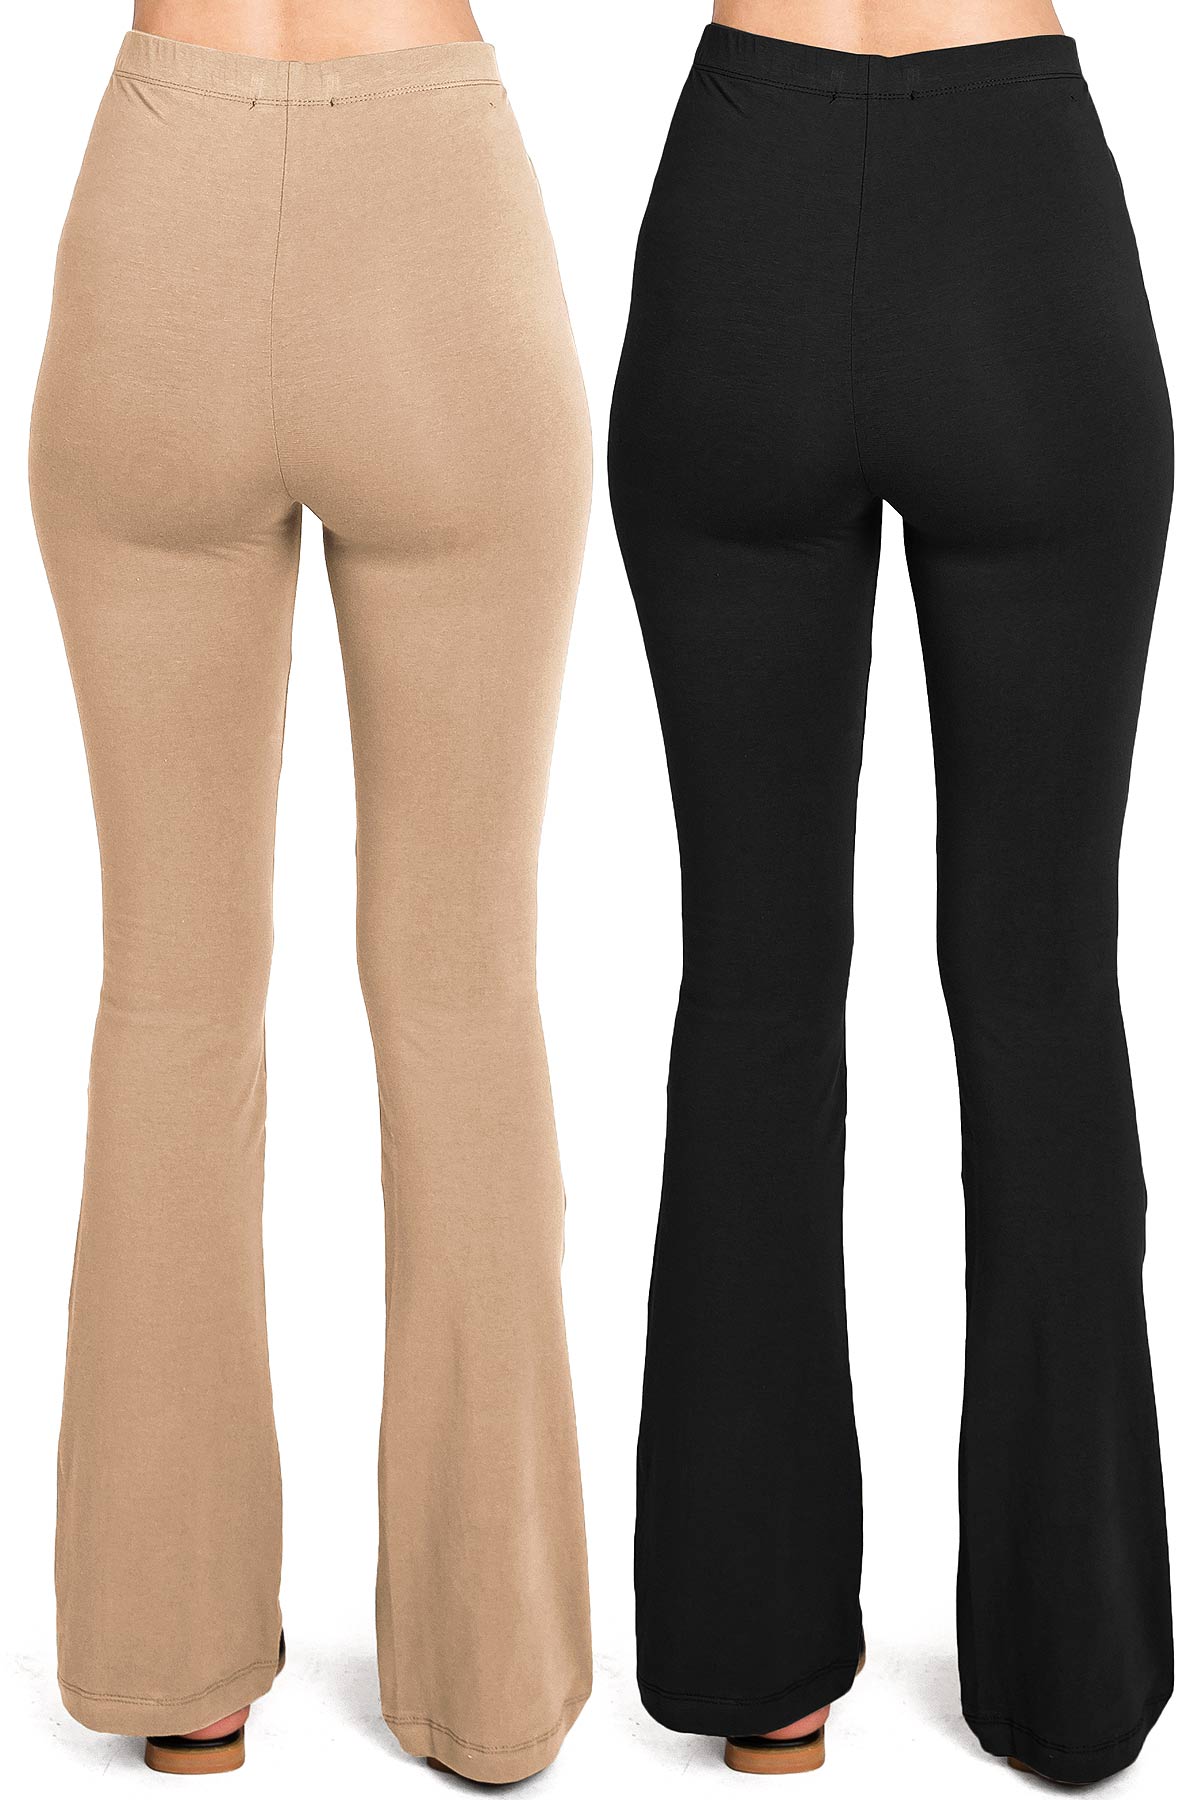 Fesfesfes Fashion Women Sweatpants High Waist Line Breech Breeches Close  Fitting Sports Pants Clearance 